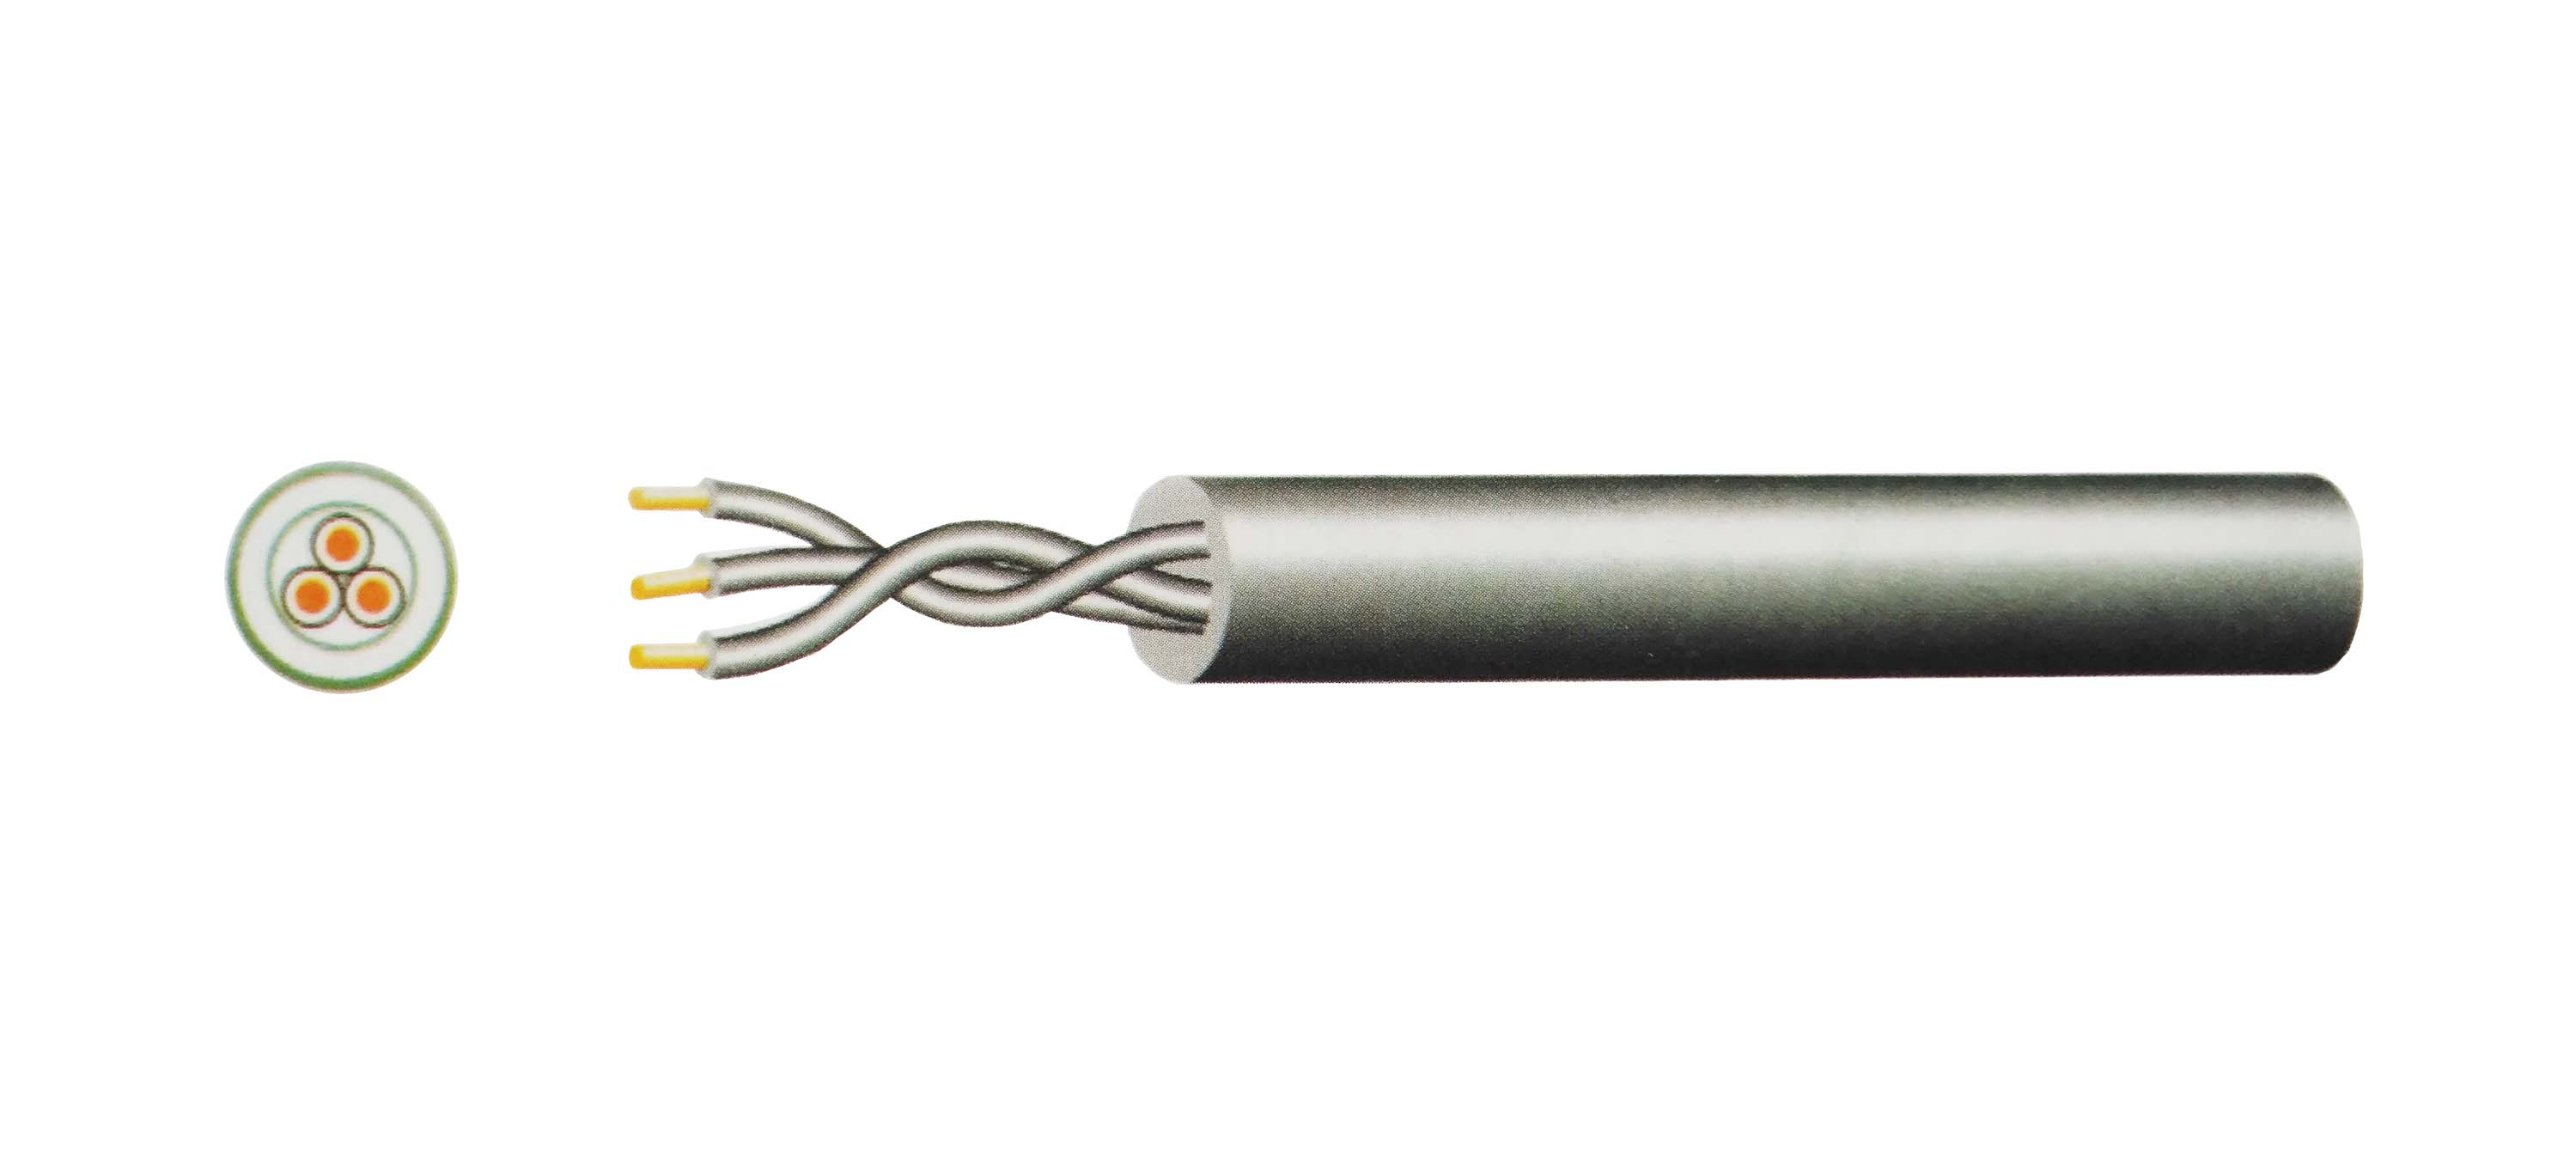 IEC52 60227 H03VV-F Flexible Power Cord